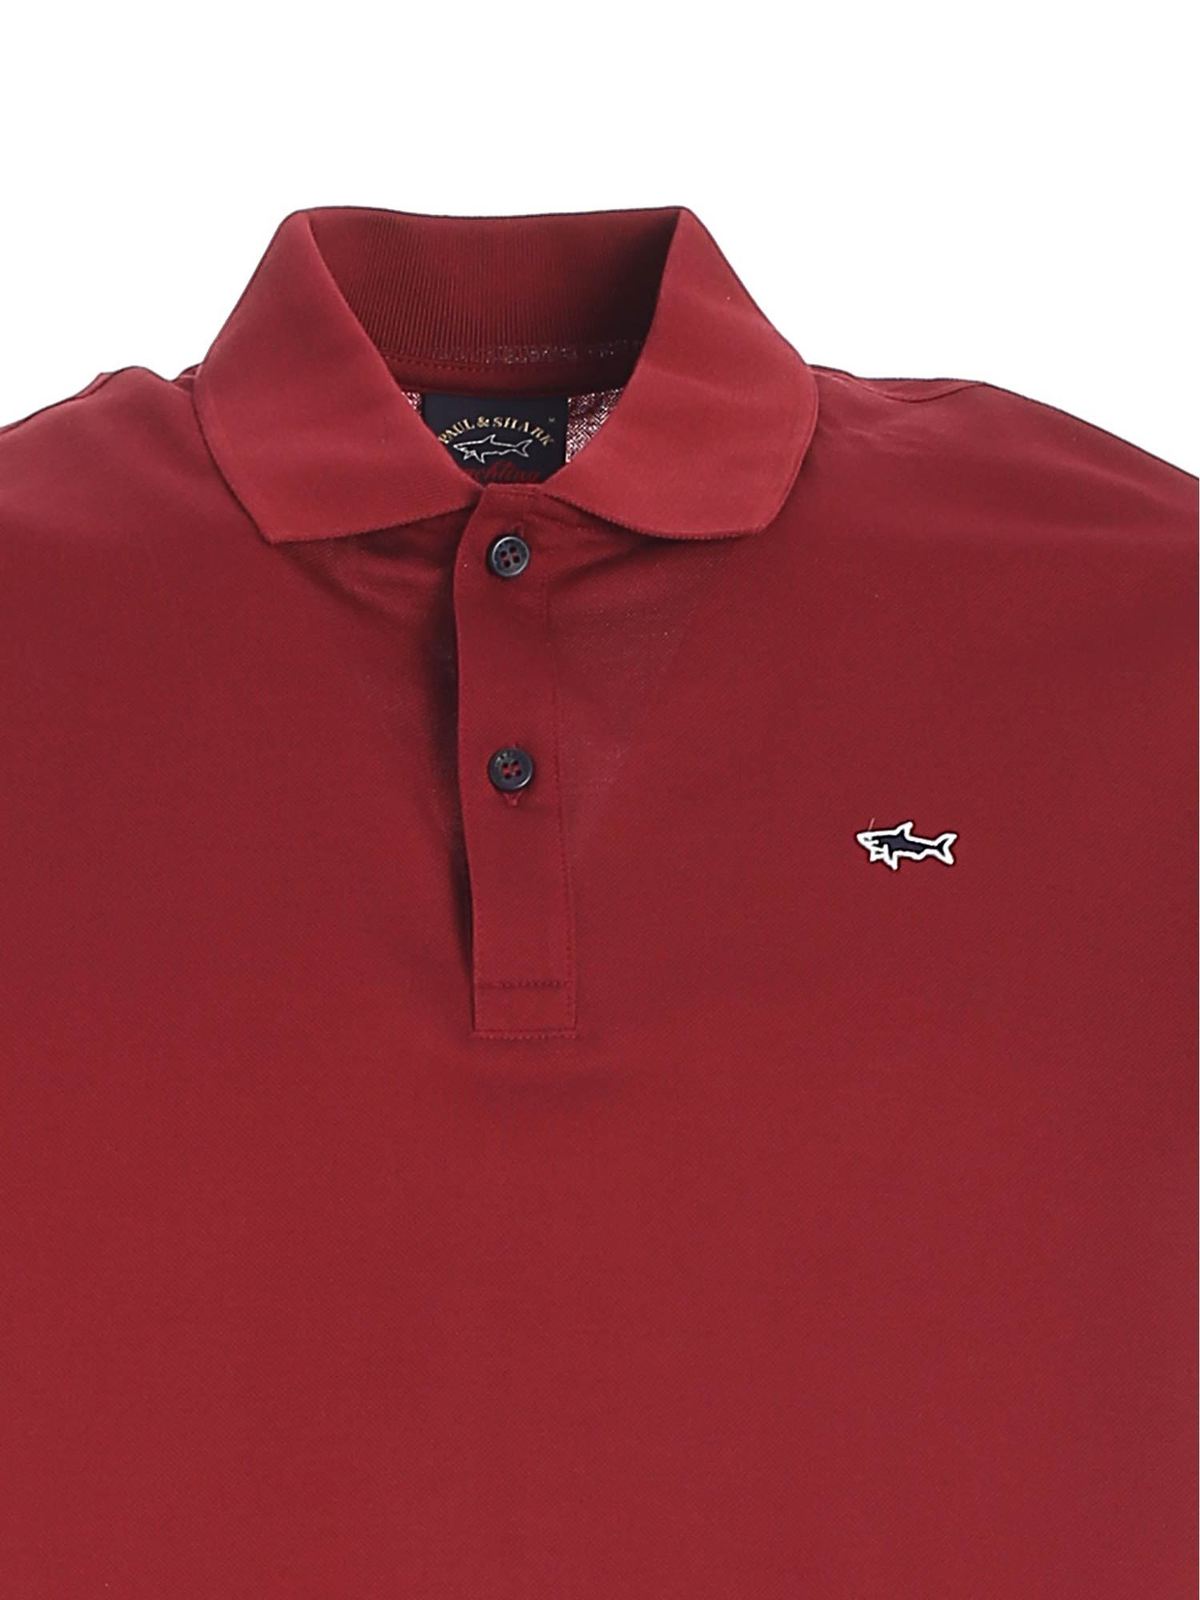 Cokes Wreed Aubergine Polo shirts Paul & Shark - Logo patch polo shirt in burgundy - C0P1013142